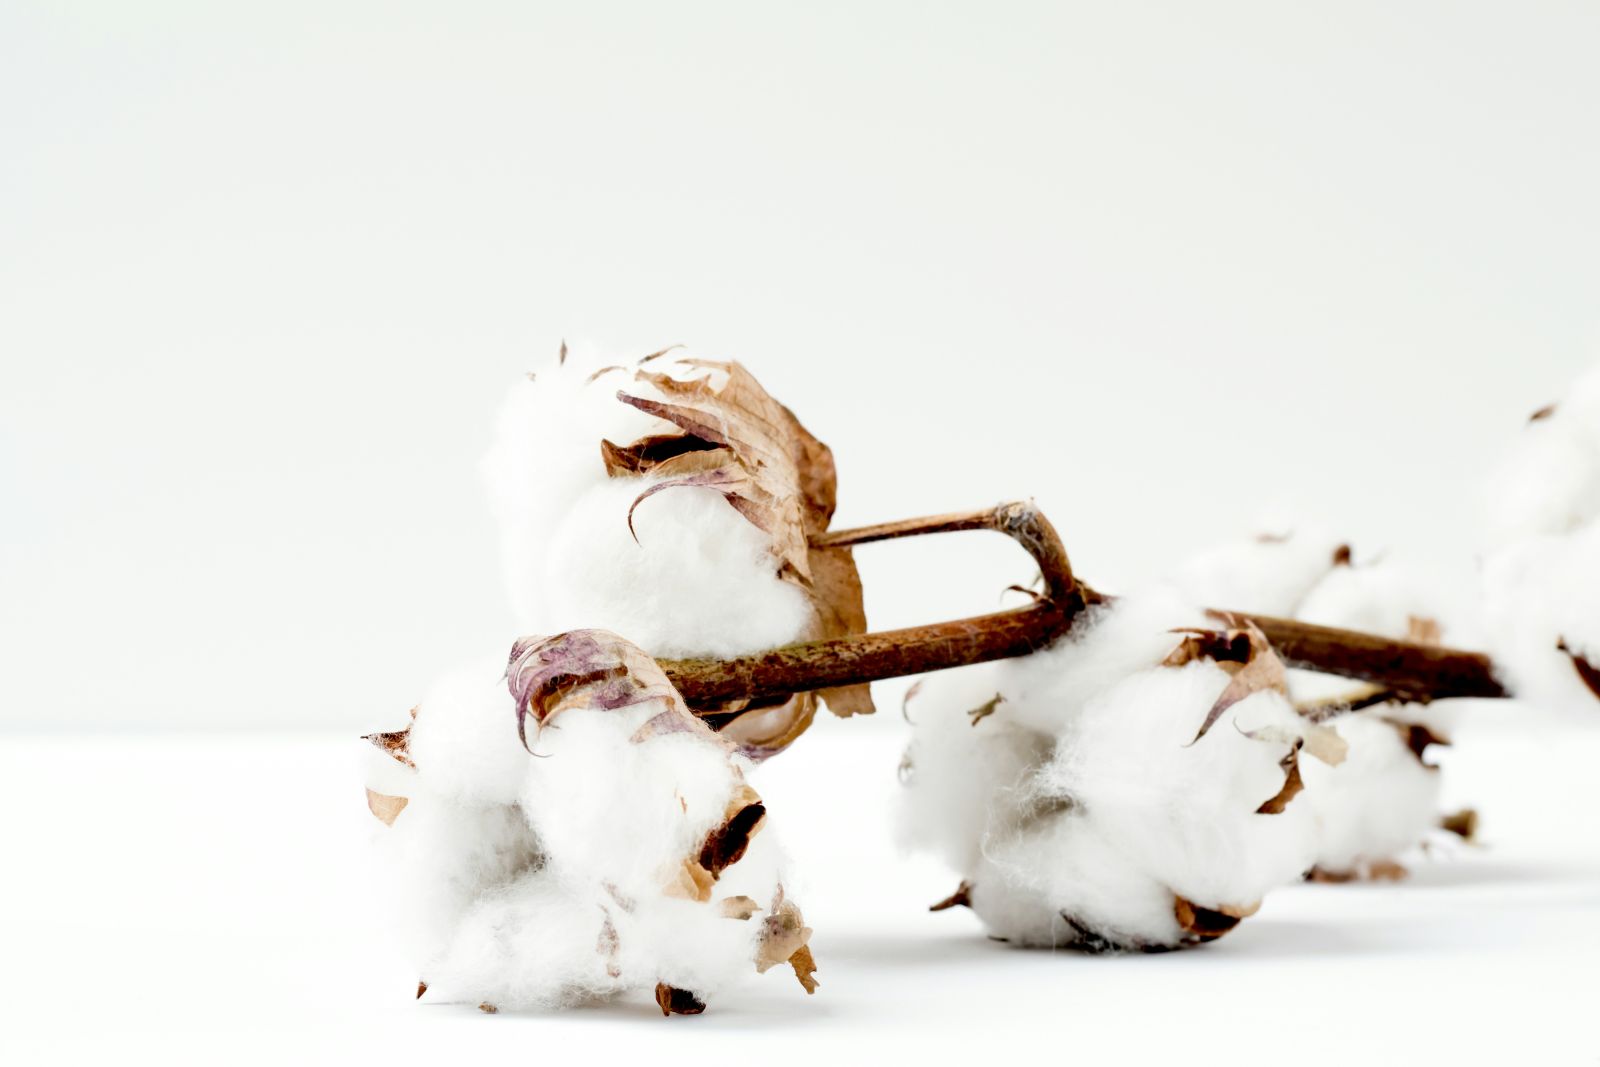 Cotton on dry branch by Marianne Krohn via Unsplash